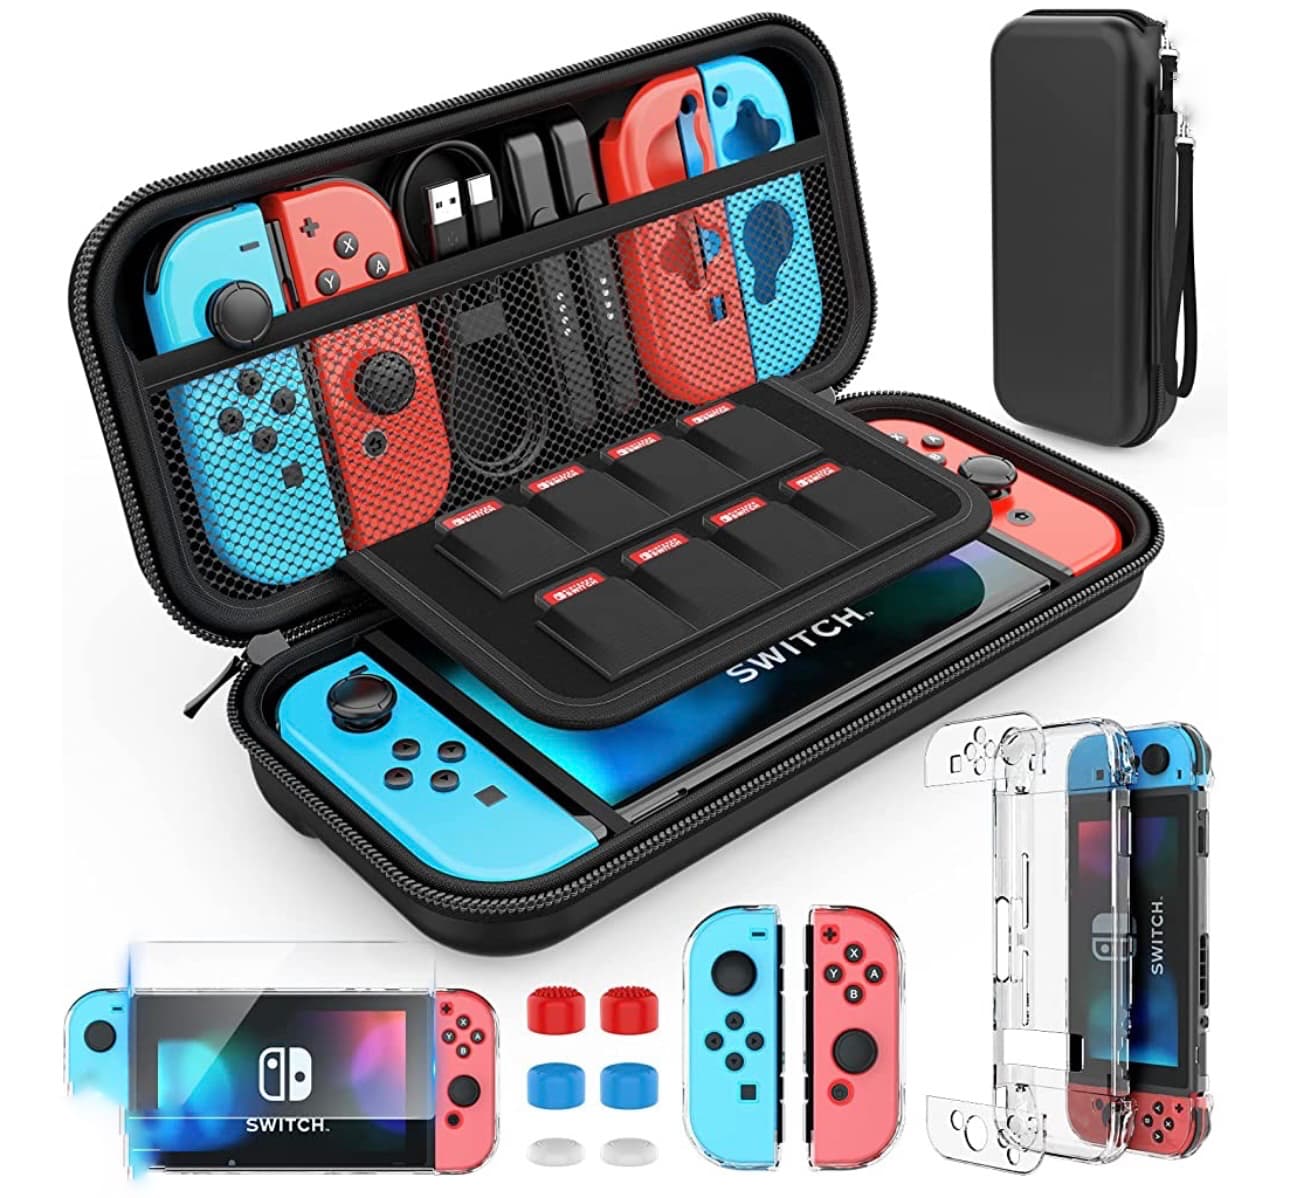 Nintendo Switch Case.